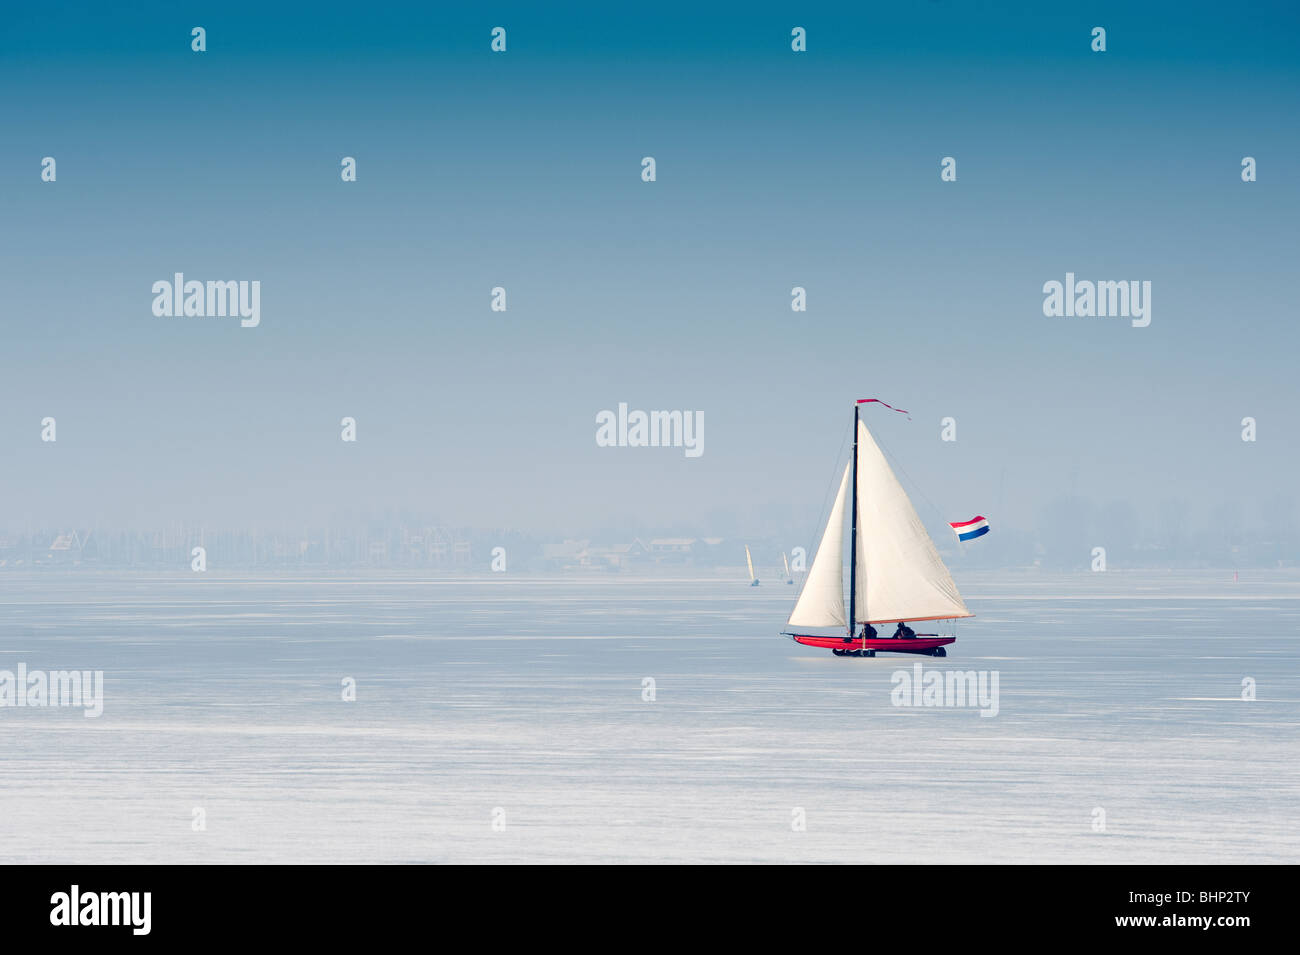 Ice sailing on the frozen lake (gouwzee Between Edam and Marken Netherlands) Stock Photo